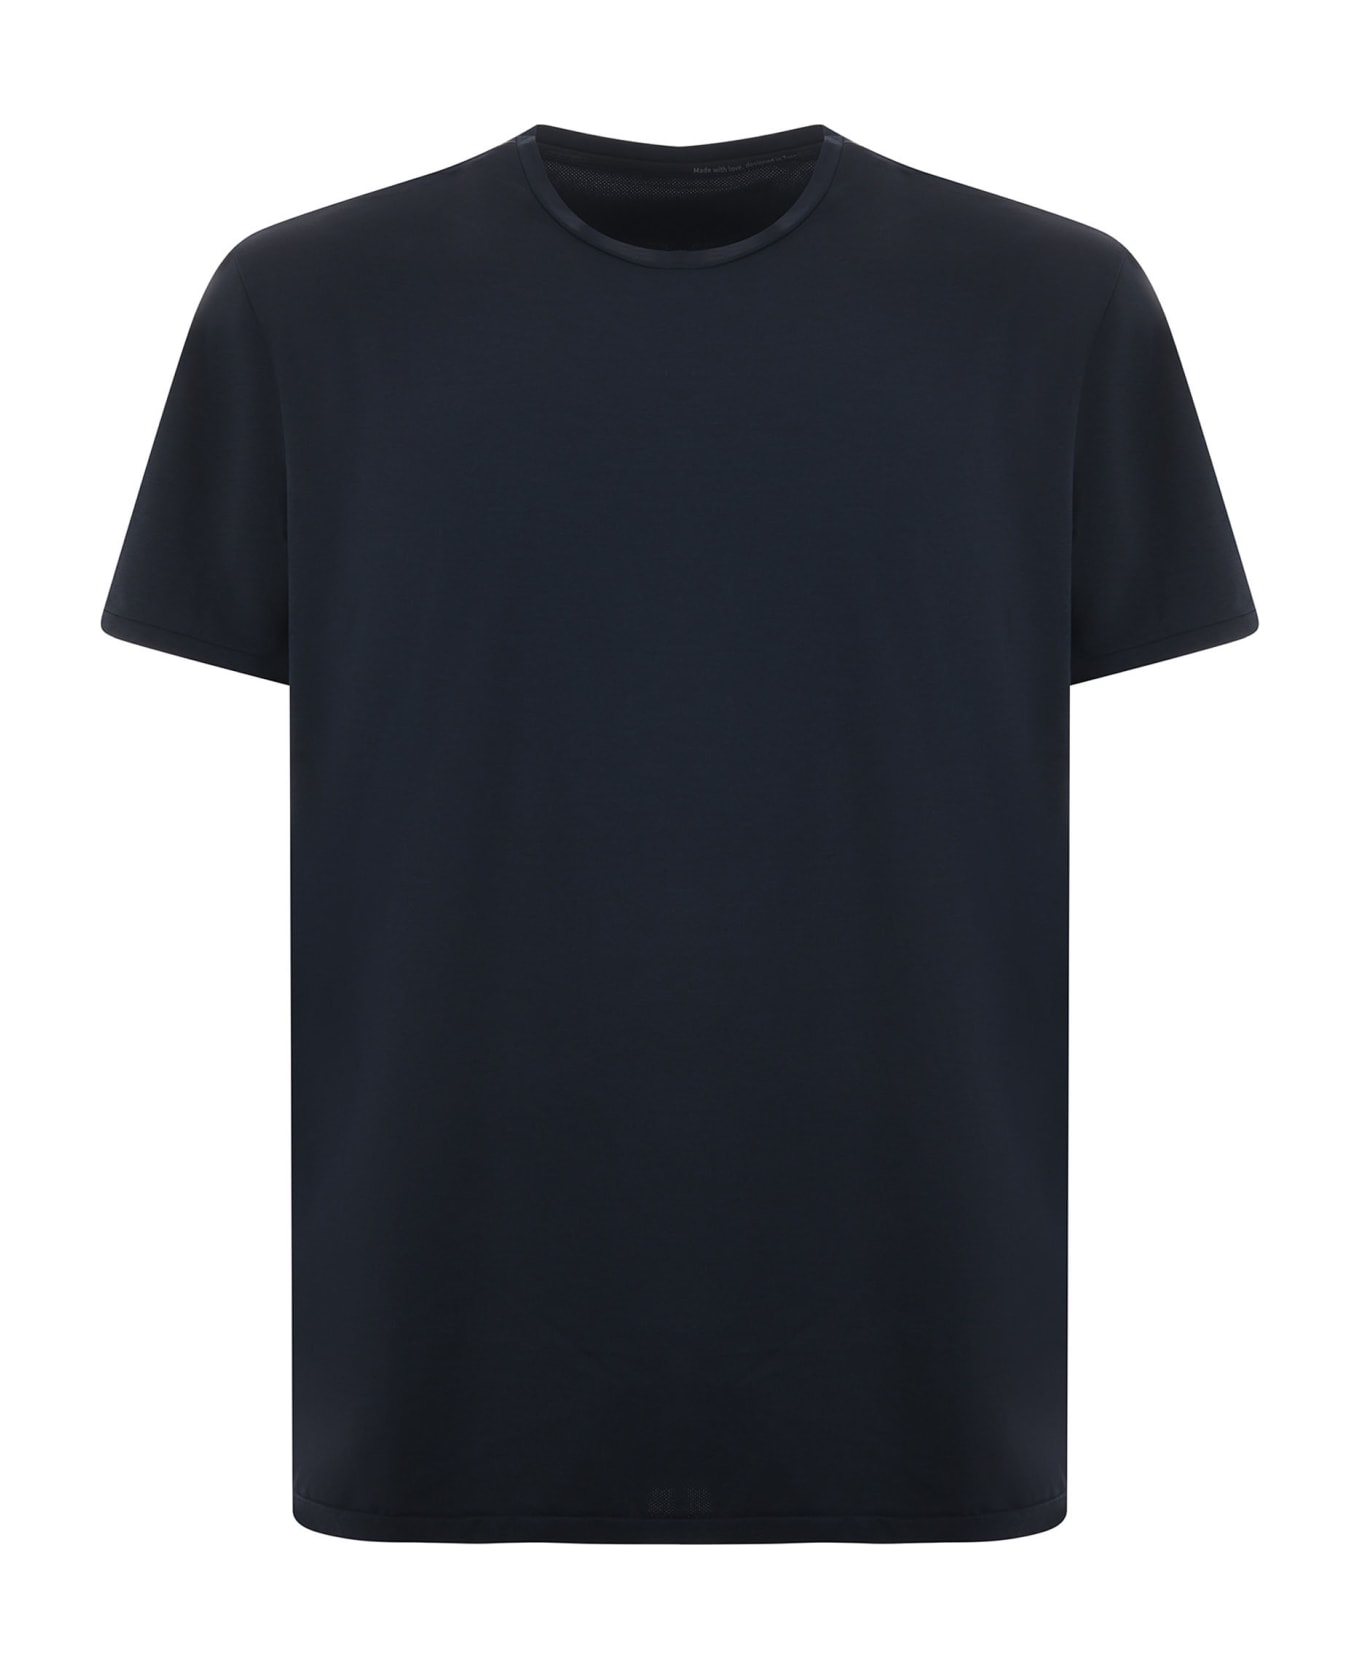 RRD - Roberto Ricci Design Rrd T-shirt - Blu scuro